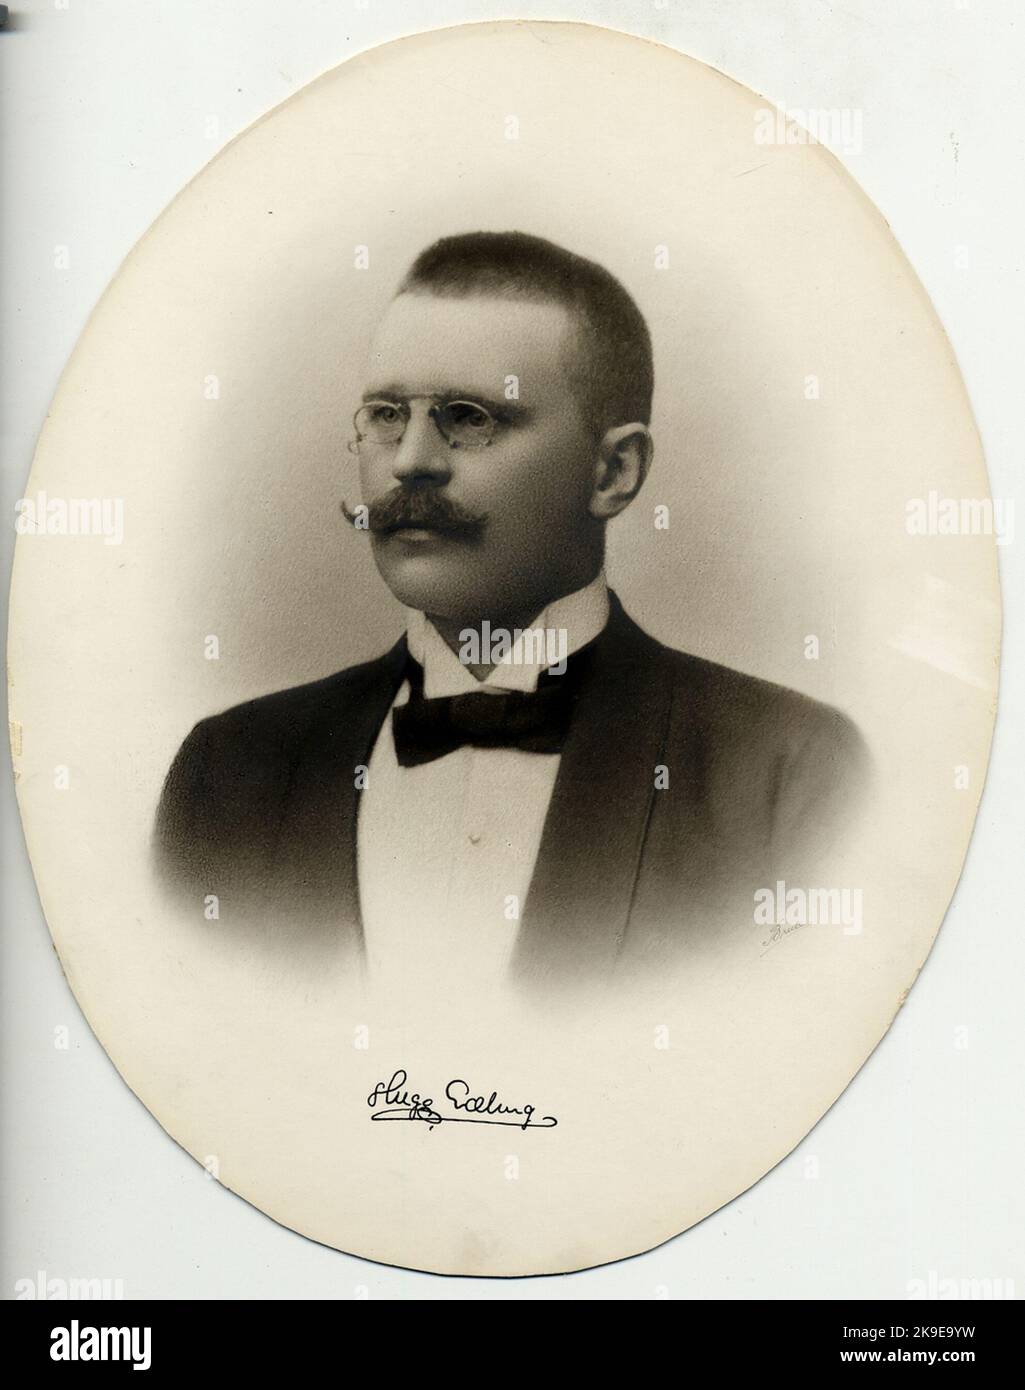 Karl Erik Hugo Edling Born 21/8 1870 TF Ban Engineering II district Gothenburg 1/1 1902 Stock Photo